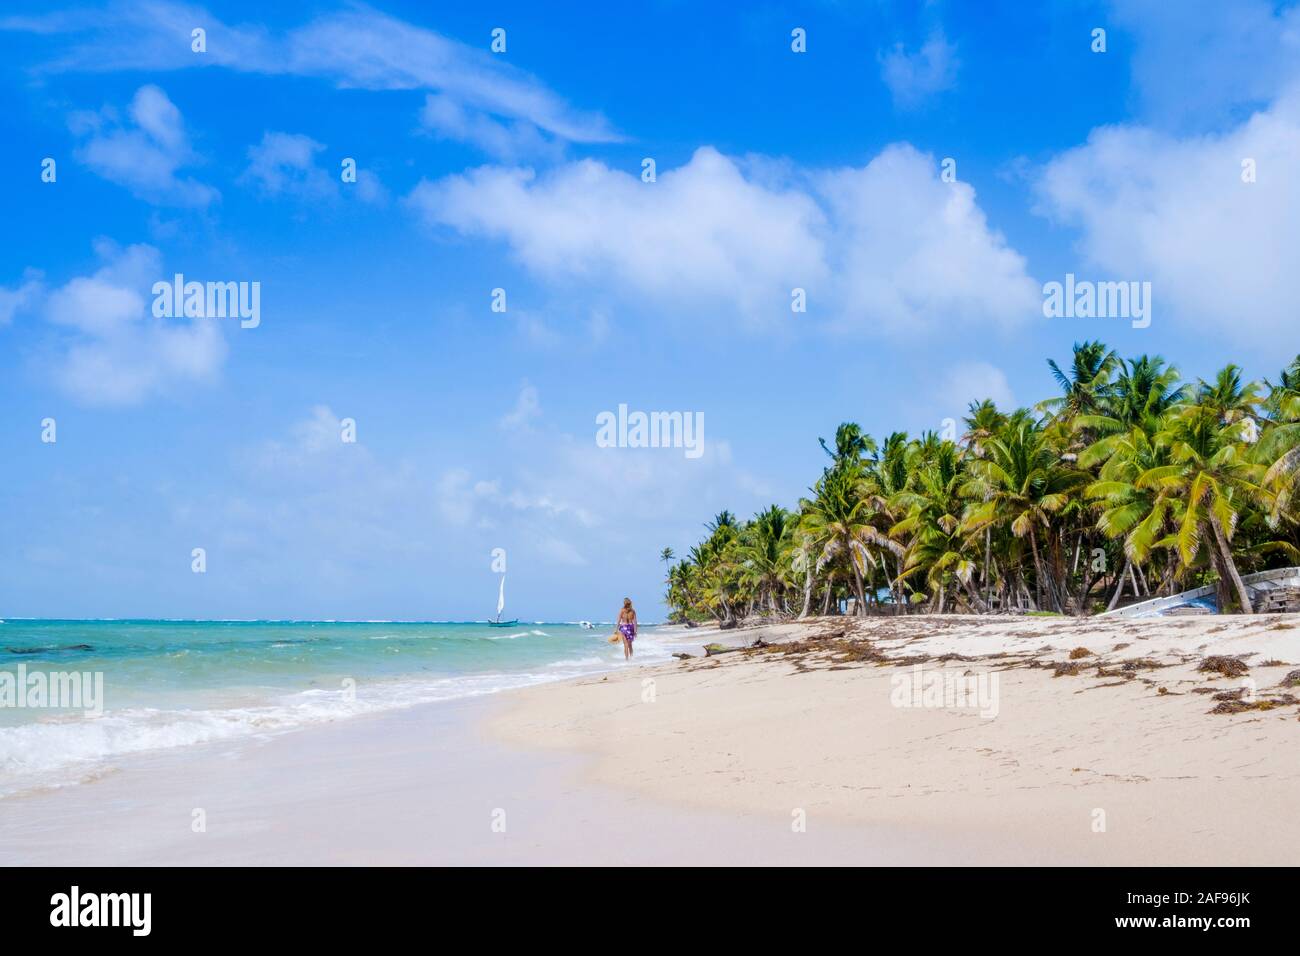 A woman walking along an idyllic tropical beach Stock Photo